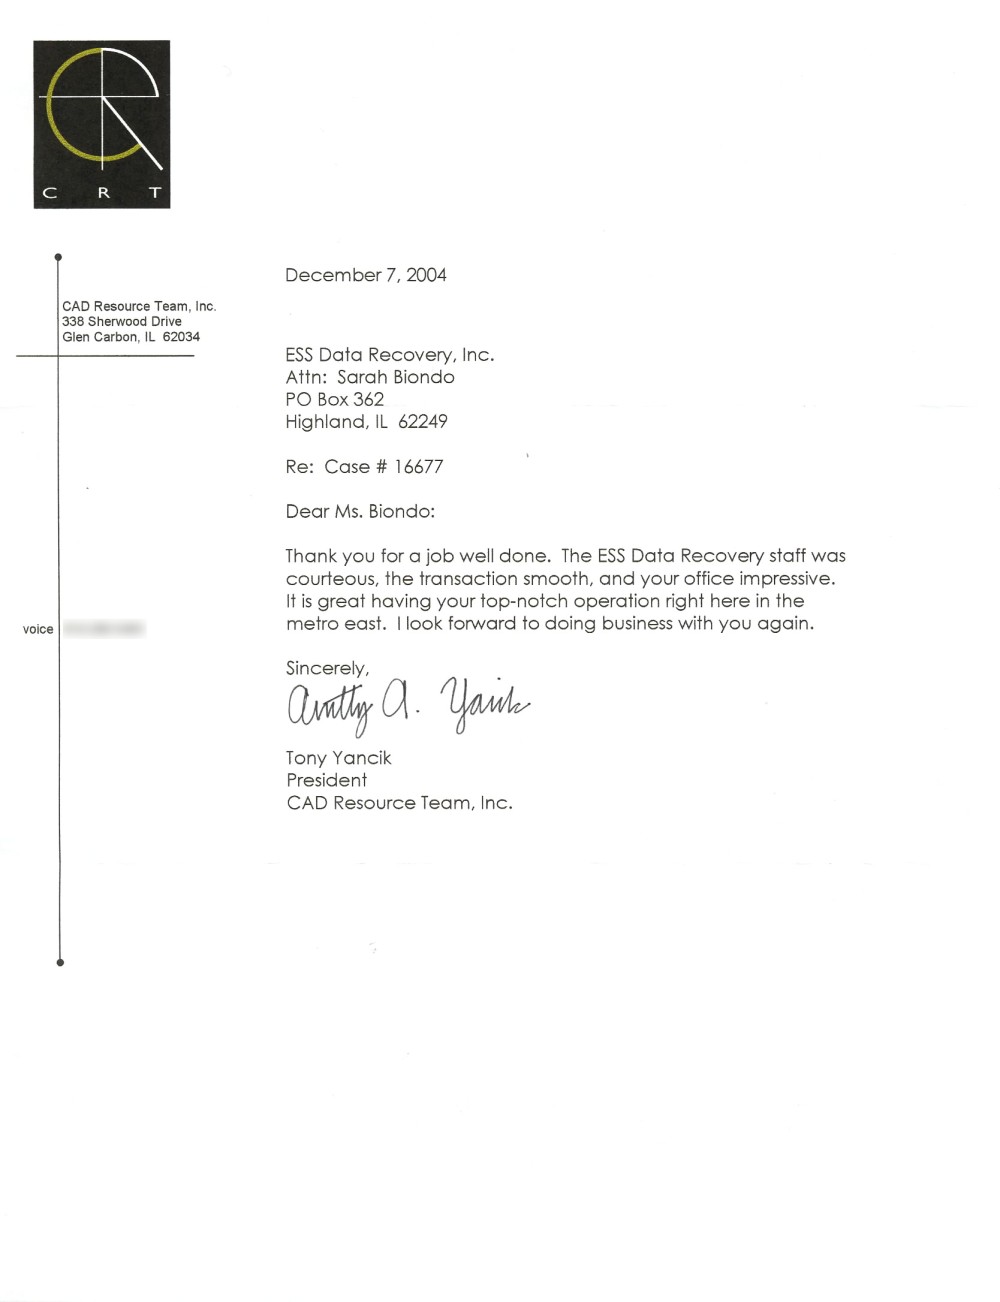 CAD Resource Team, Inc. testimonial letter